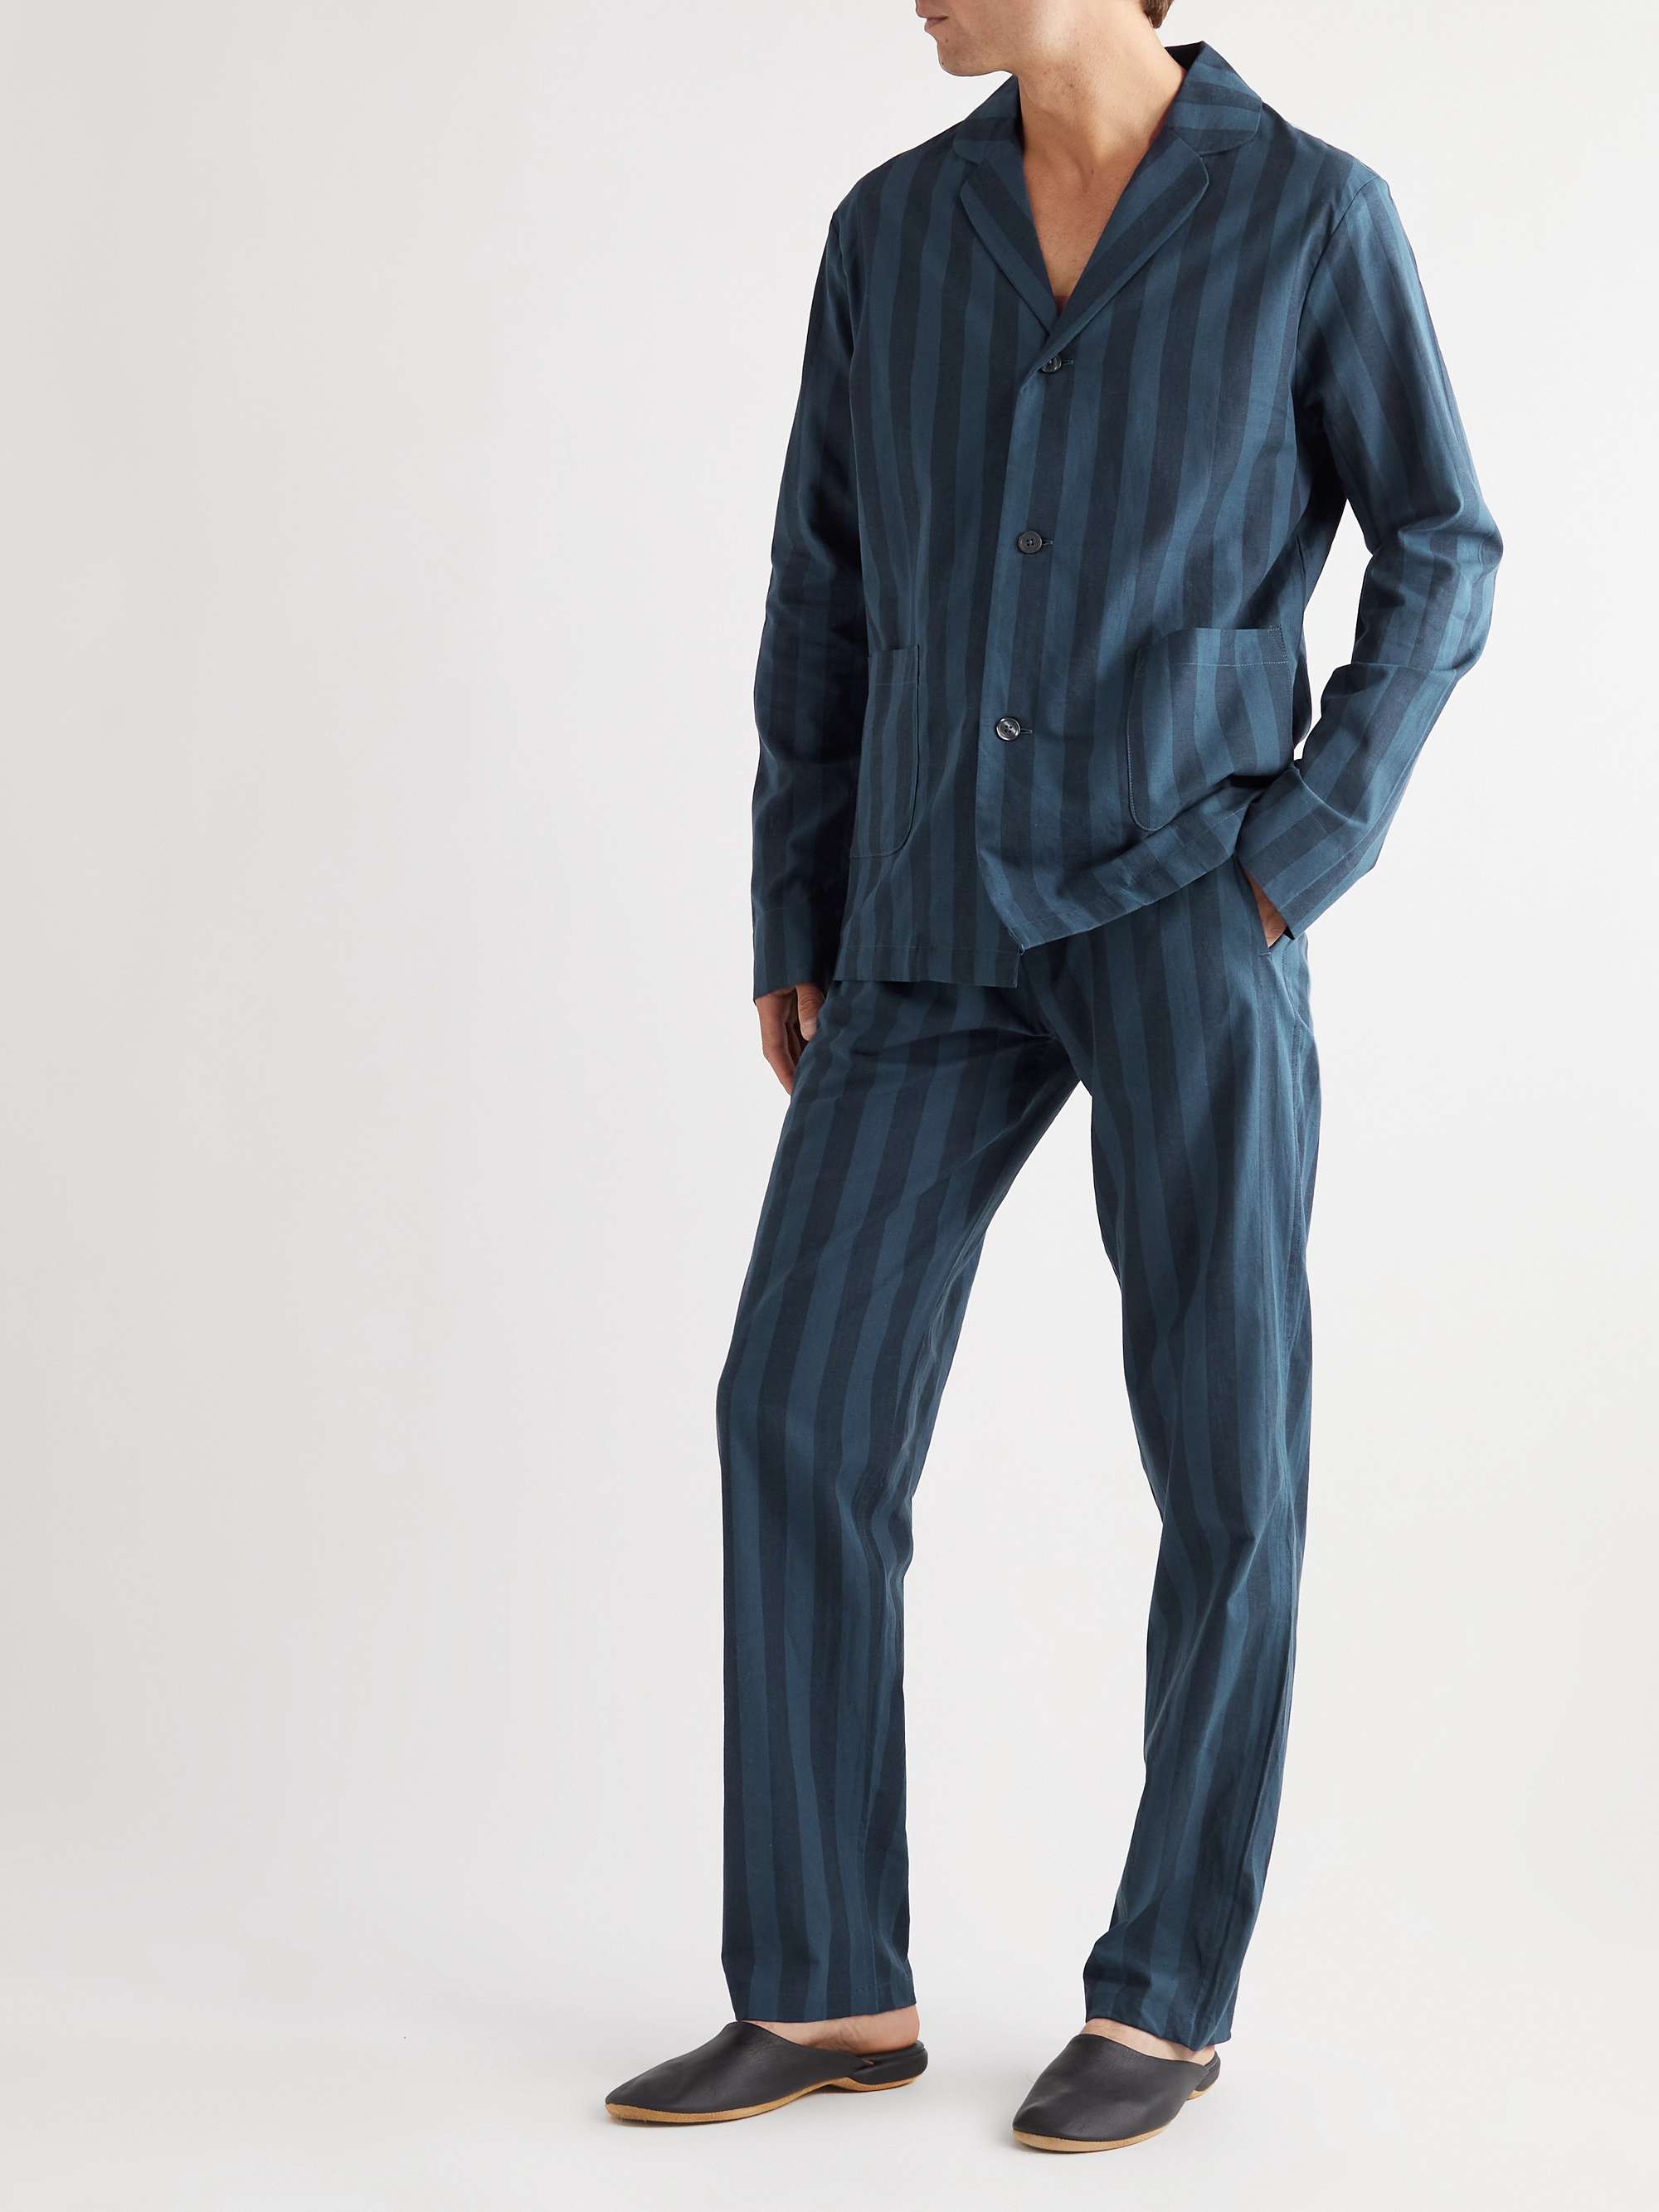 Paul Smith Navy Cotton Artist Stripe Pyjama Set in Blue for Men Mens Clothing Nightwear and sleepwear 